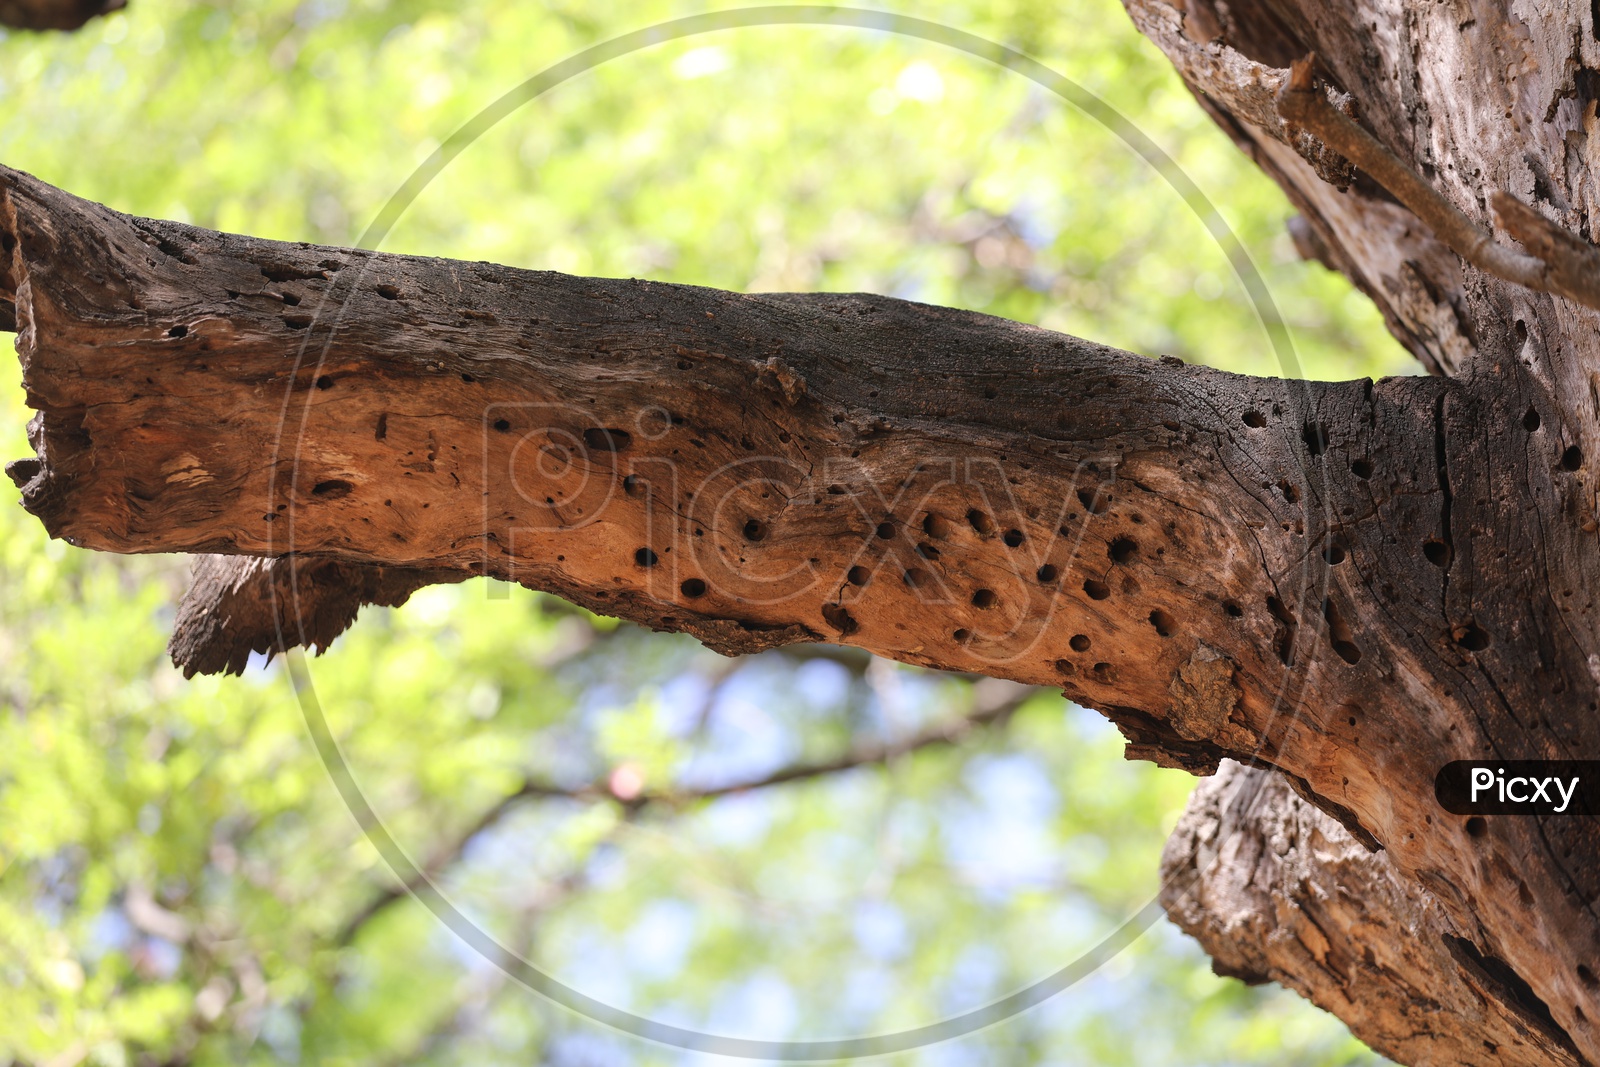 Dried tree trunk